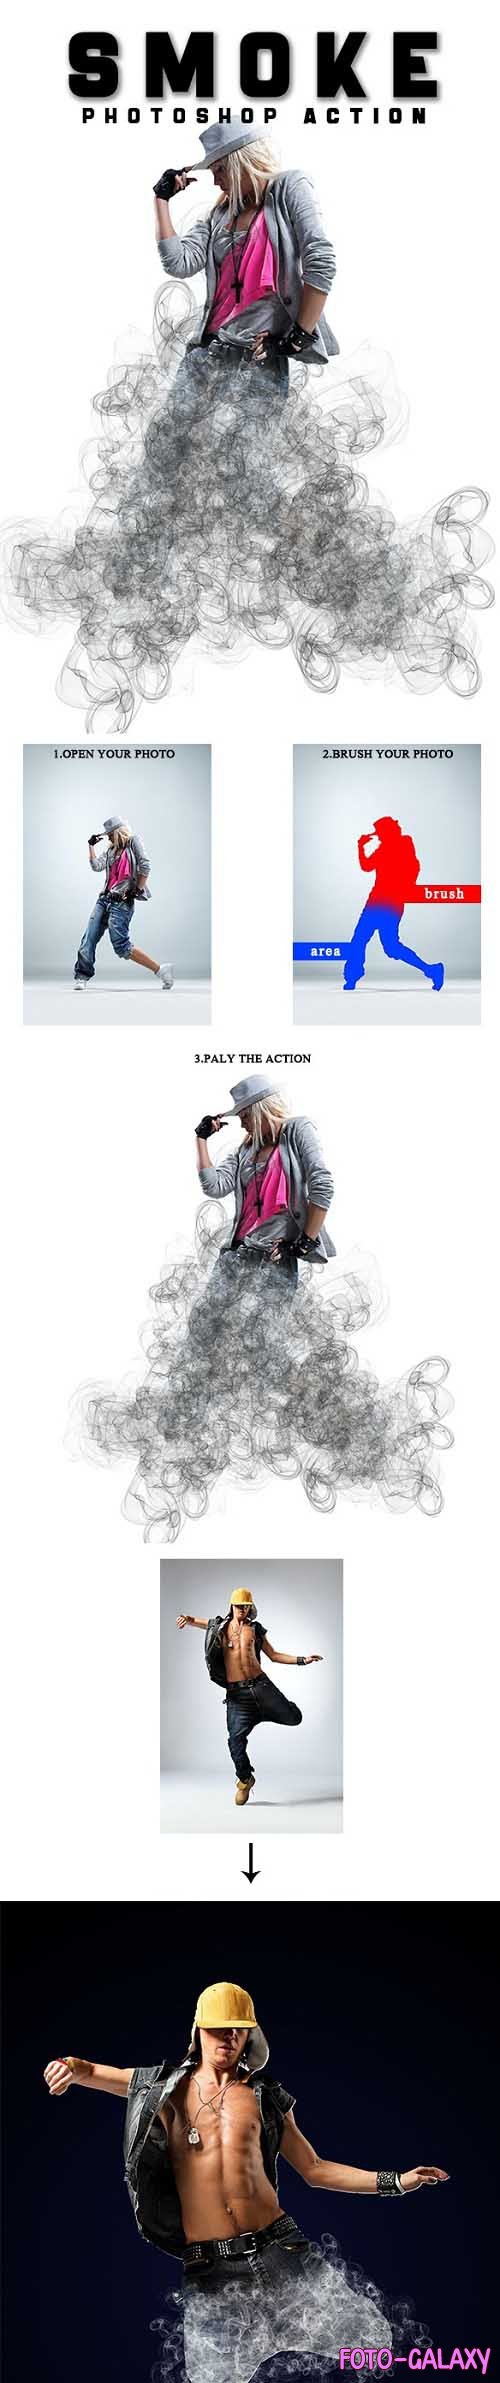 Smoke Photoshop Action - 6800329 - 26294524